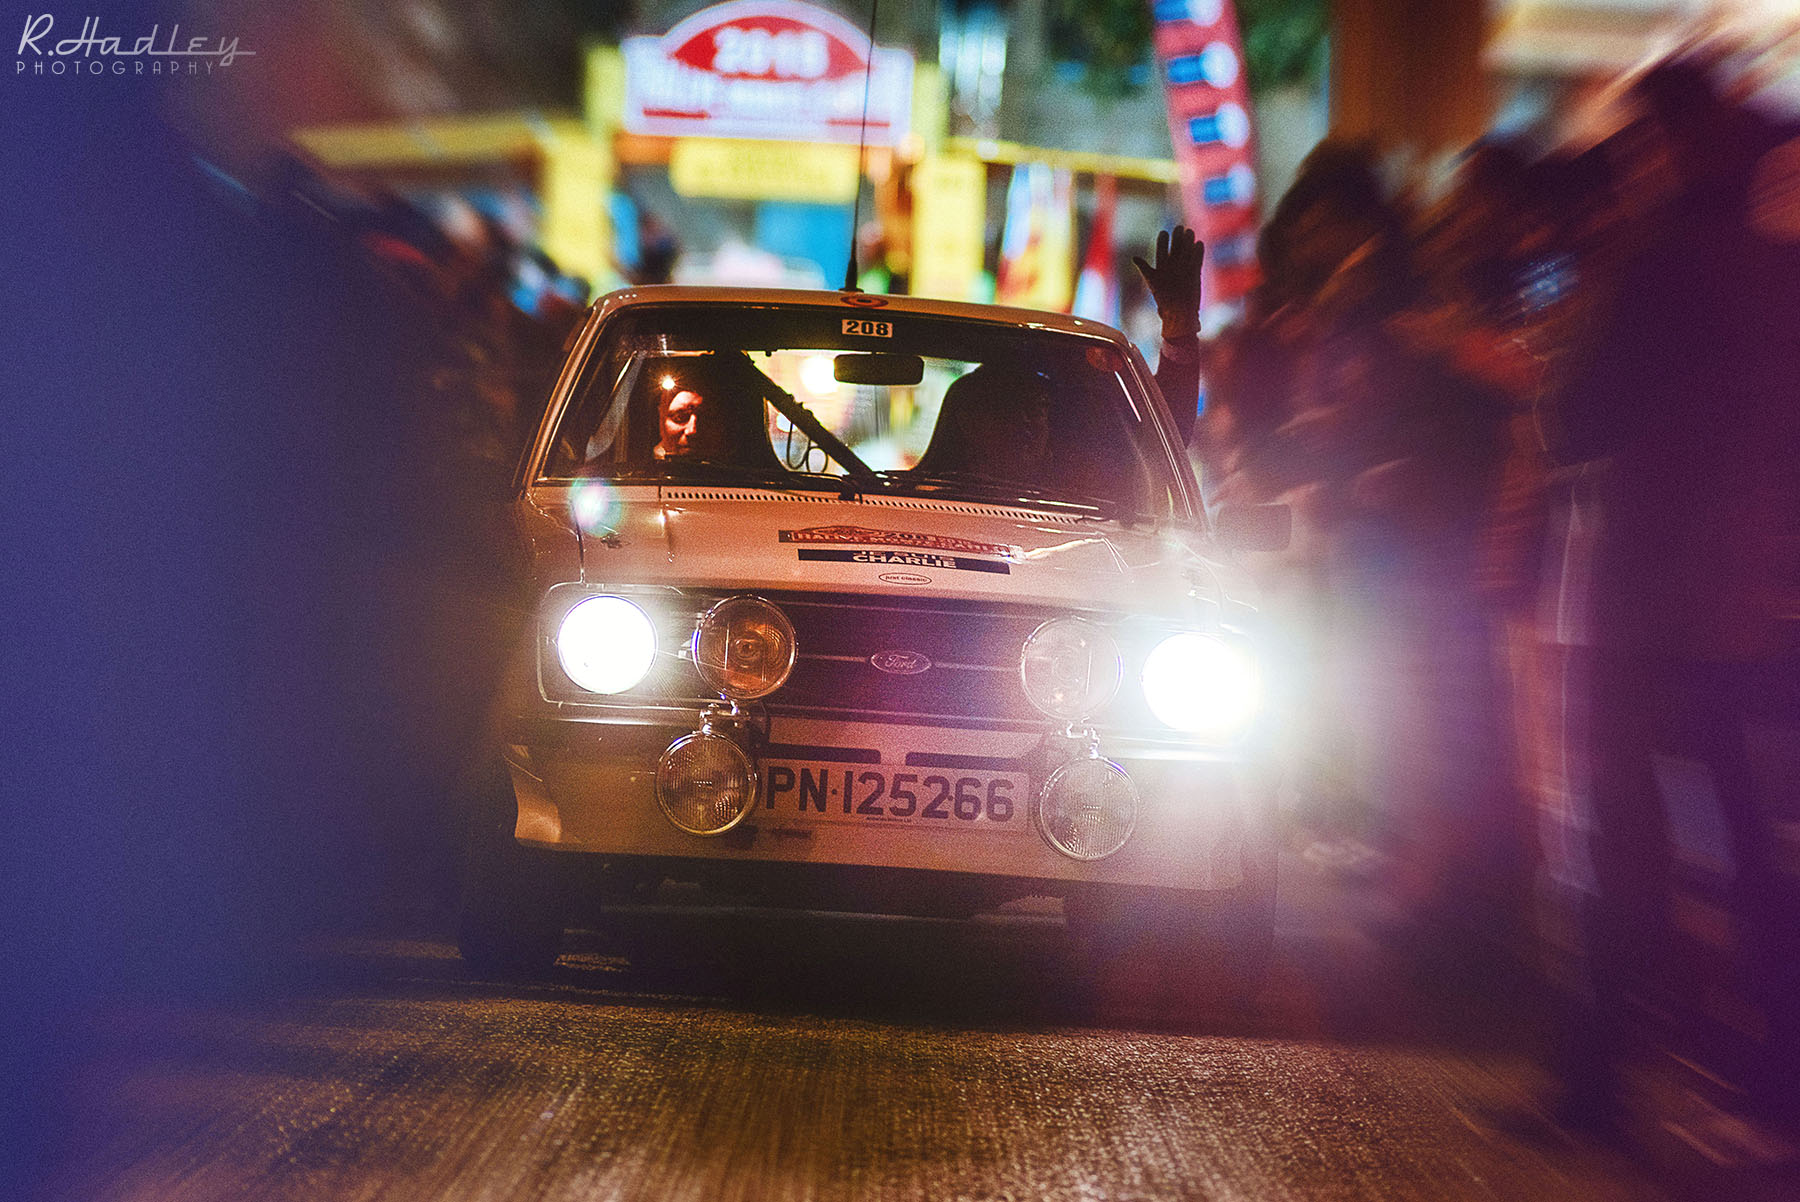 Barcelona event of Rallye Monte-Carlo Historique 2015